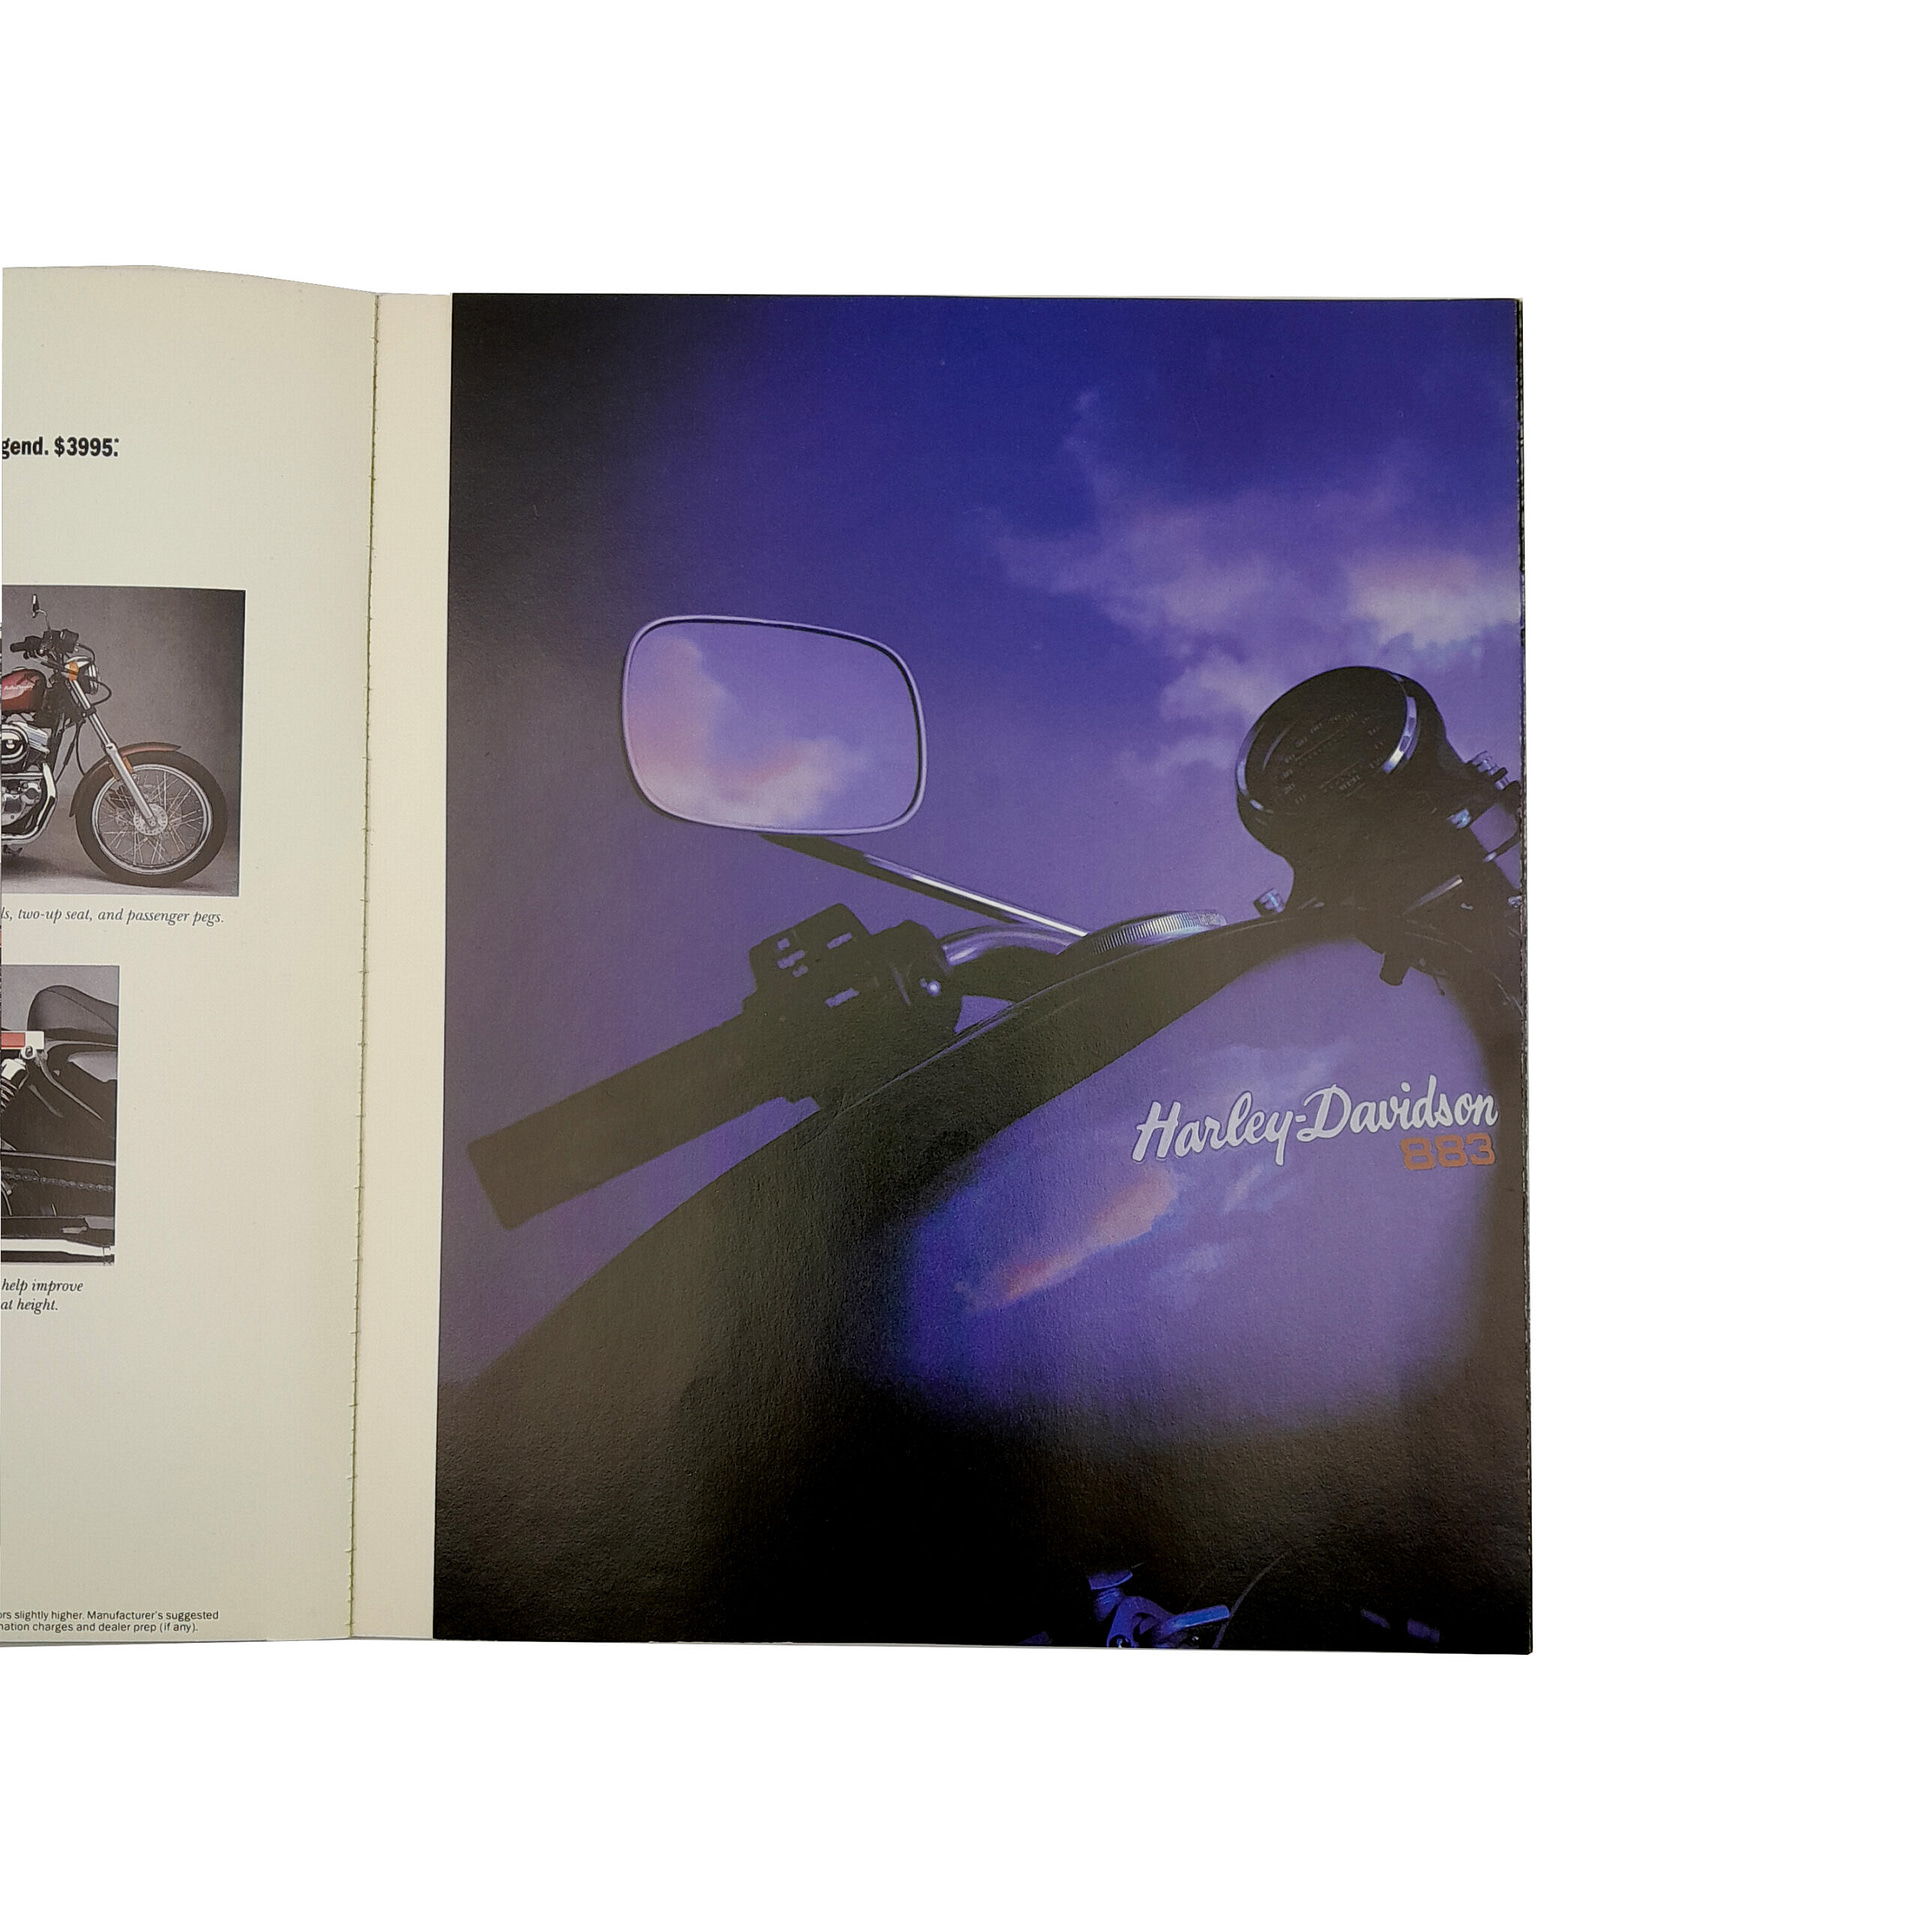 Original 1988 Full Color Harley-Davidson Bike Line Catalog with Star Power